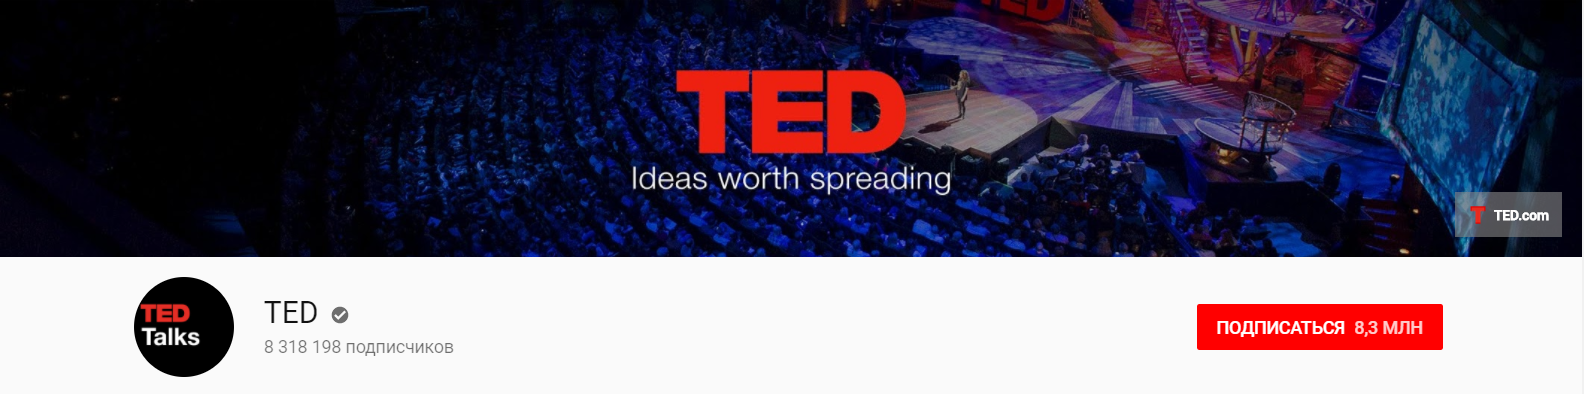 TED-ідеї для фону каналу YouTube